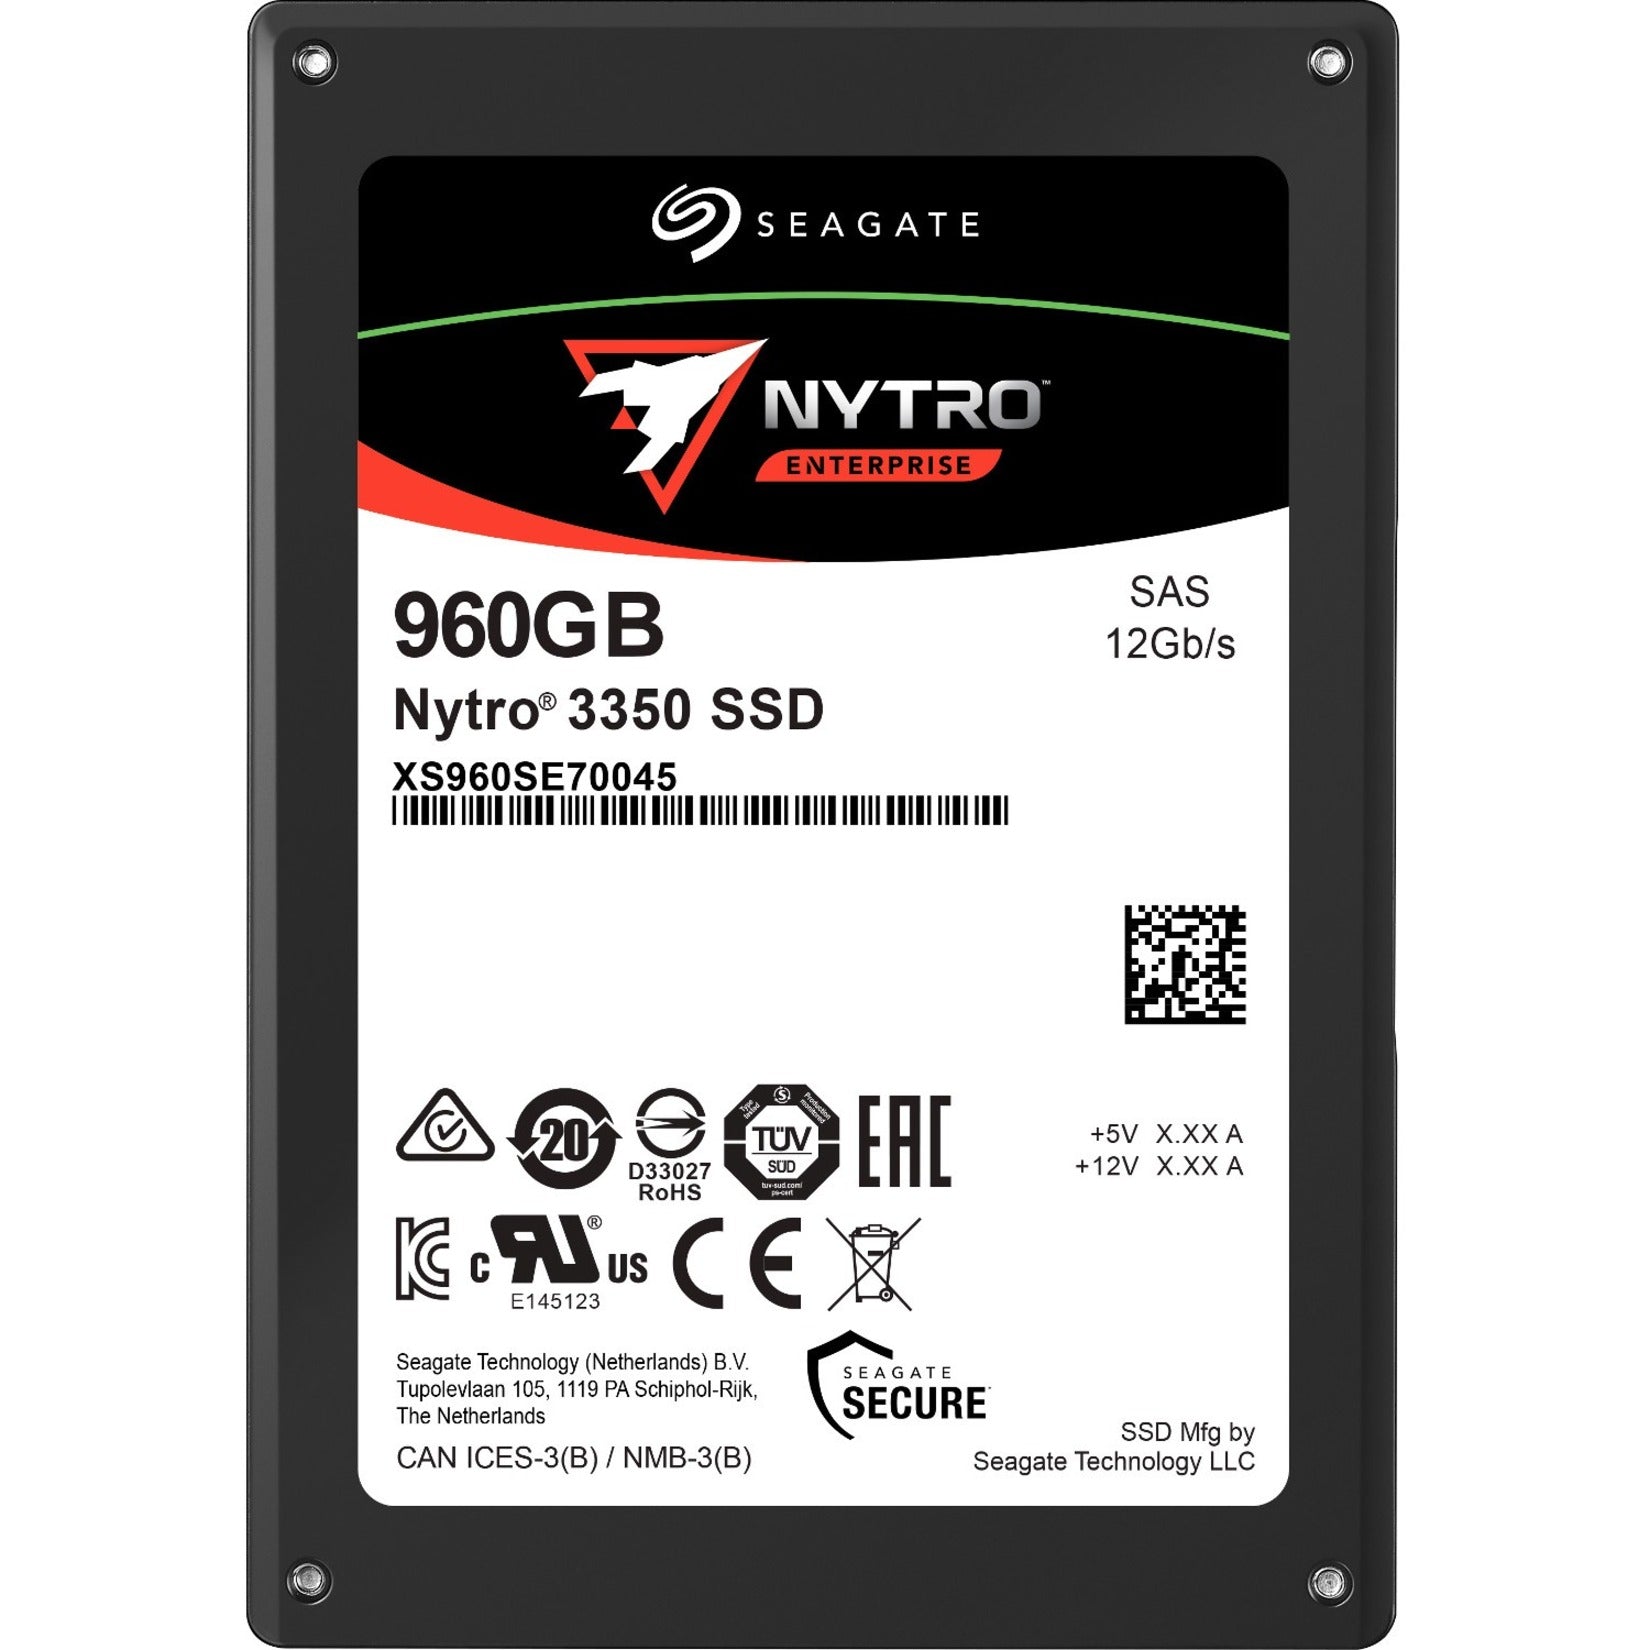 Seagate XS960SE70045 Nytro 3350 Solid State Drive, 960GB, 12Gb/s SAS, 5 Year Warranty